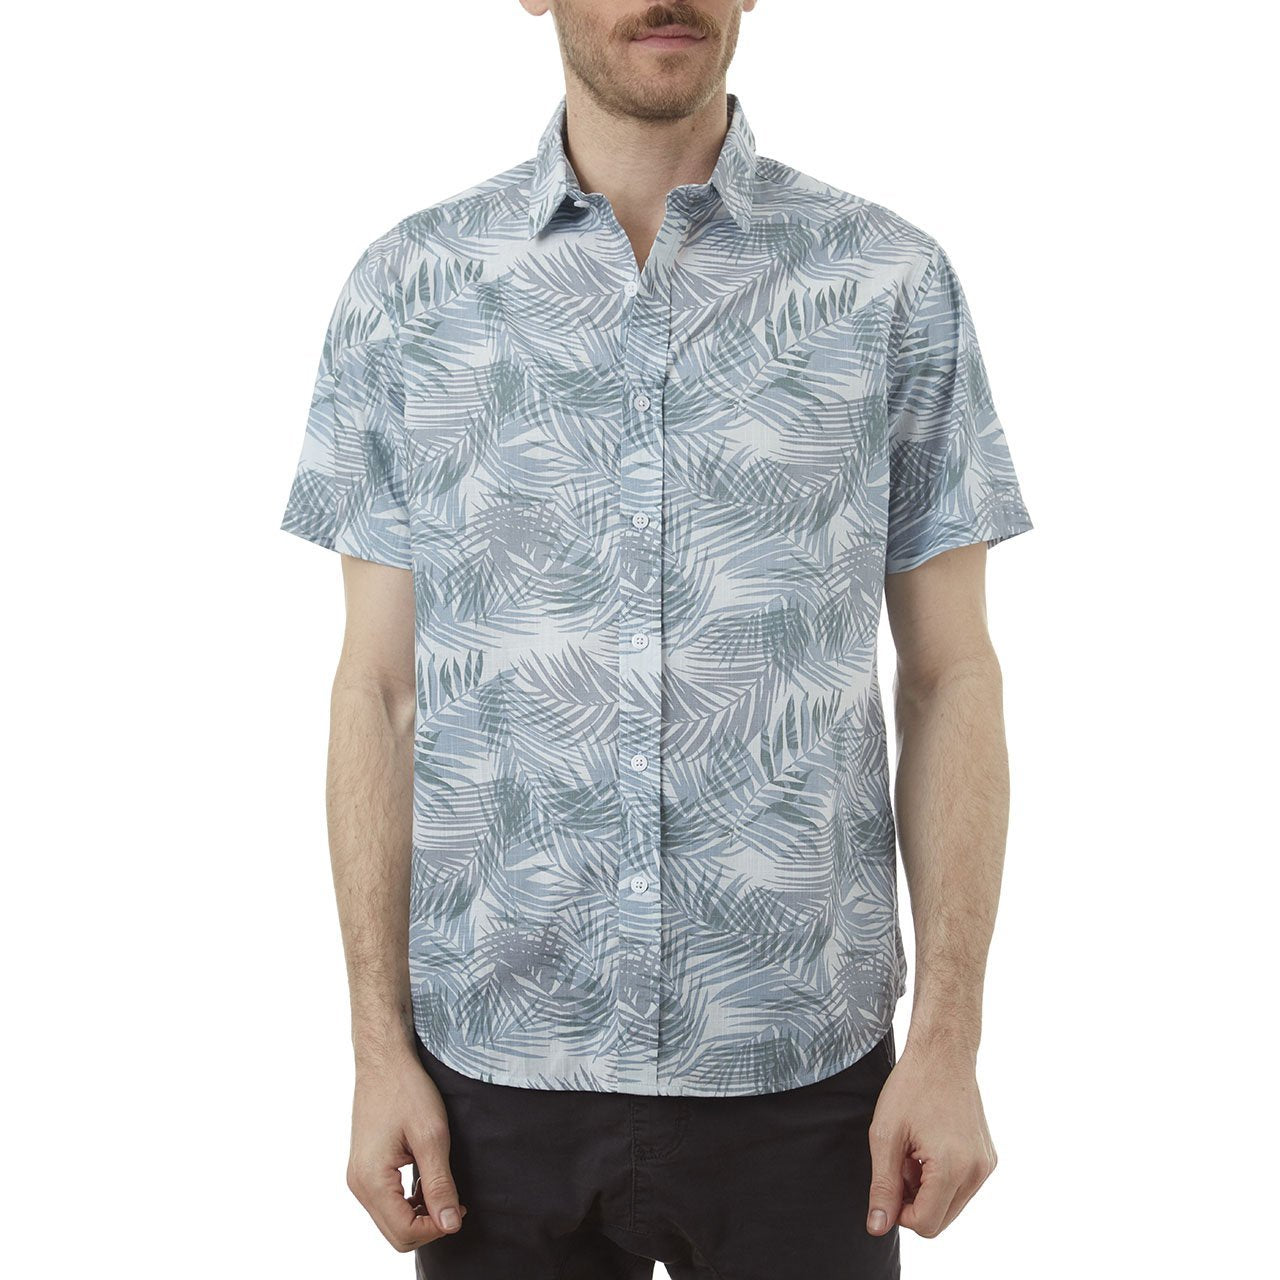 Picture of a Men's Light Blue Hawaiian Shirt front view